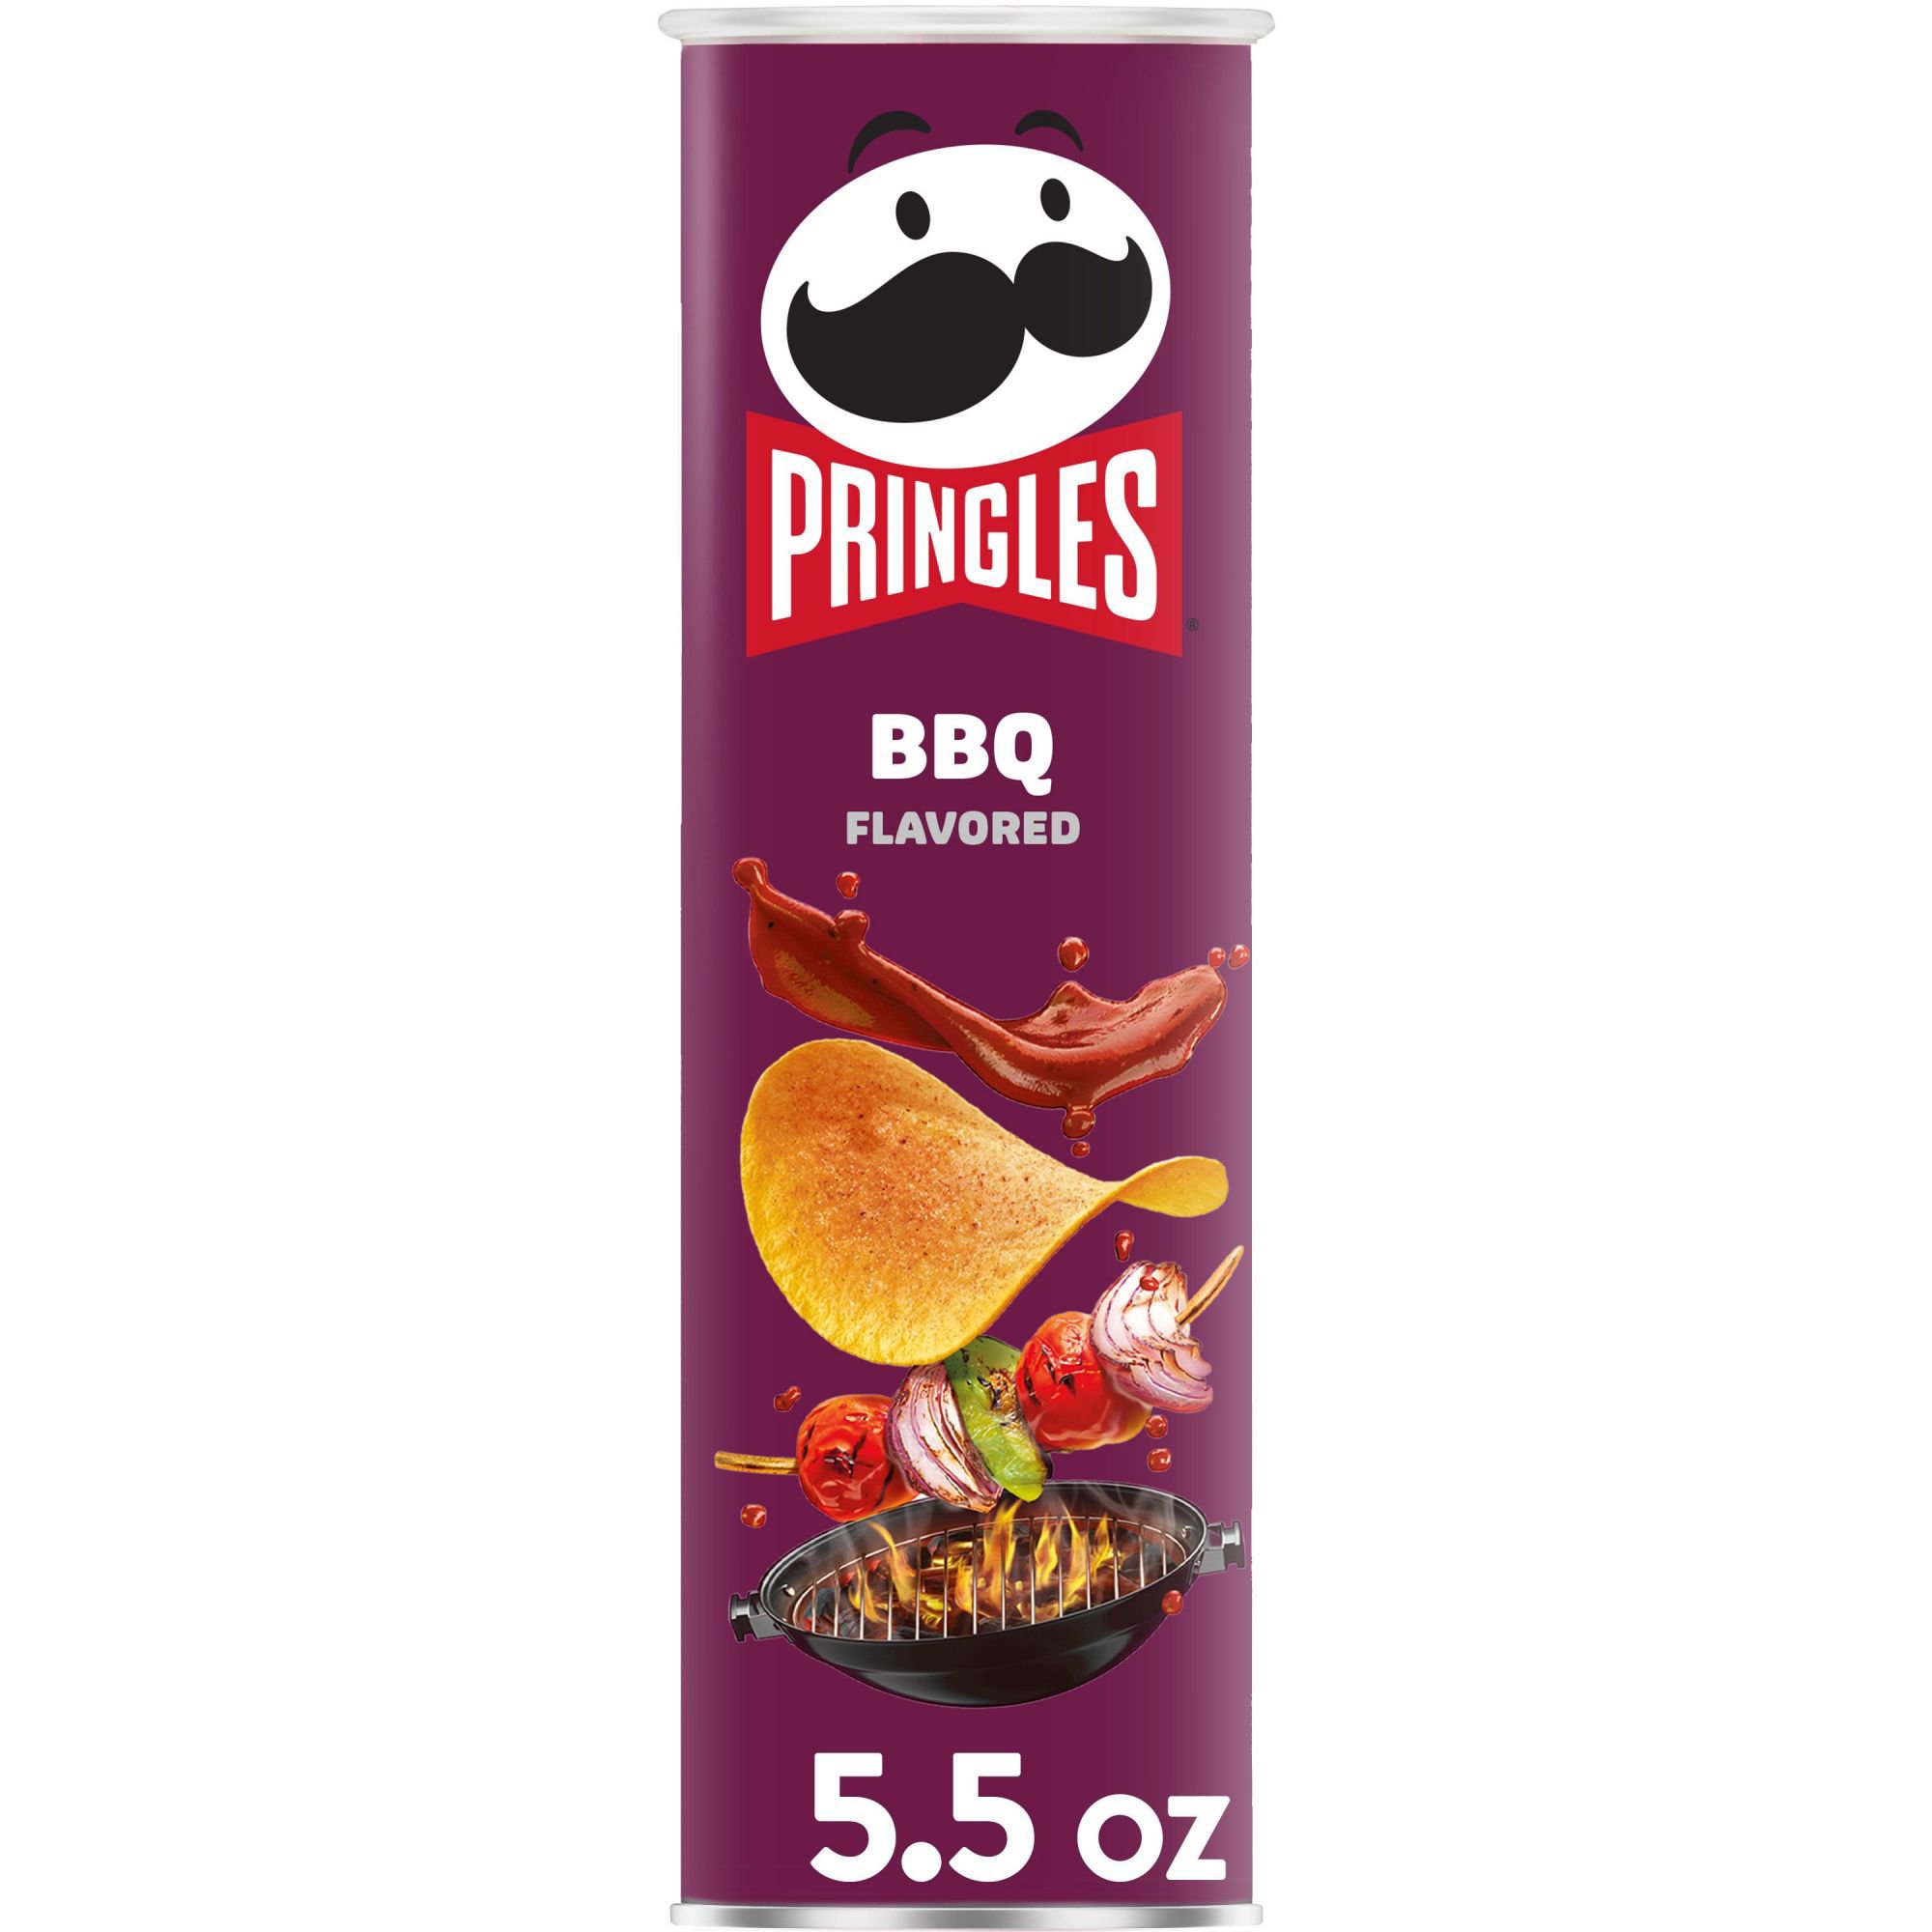 Pringles Snack Stacks Potato Crisps Chips BBQ Flavored - Shop Chips at ...